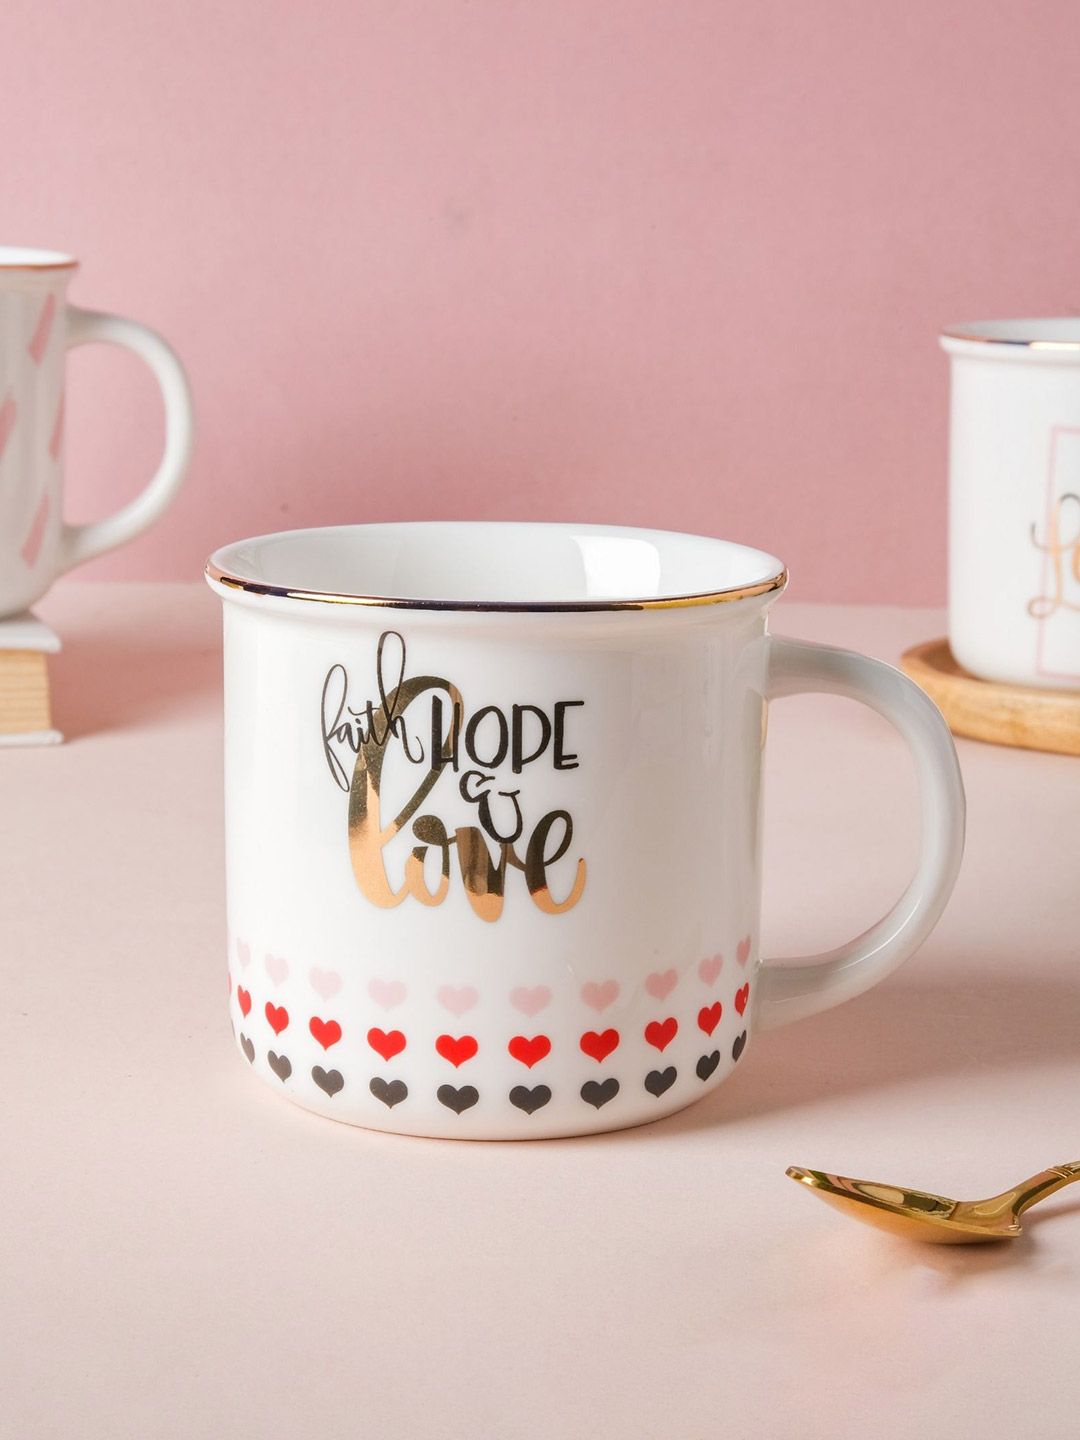 Nestasia White and Pink Printed Ceramic Mug For Coffee Price in India